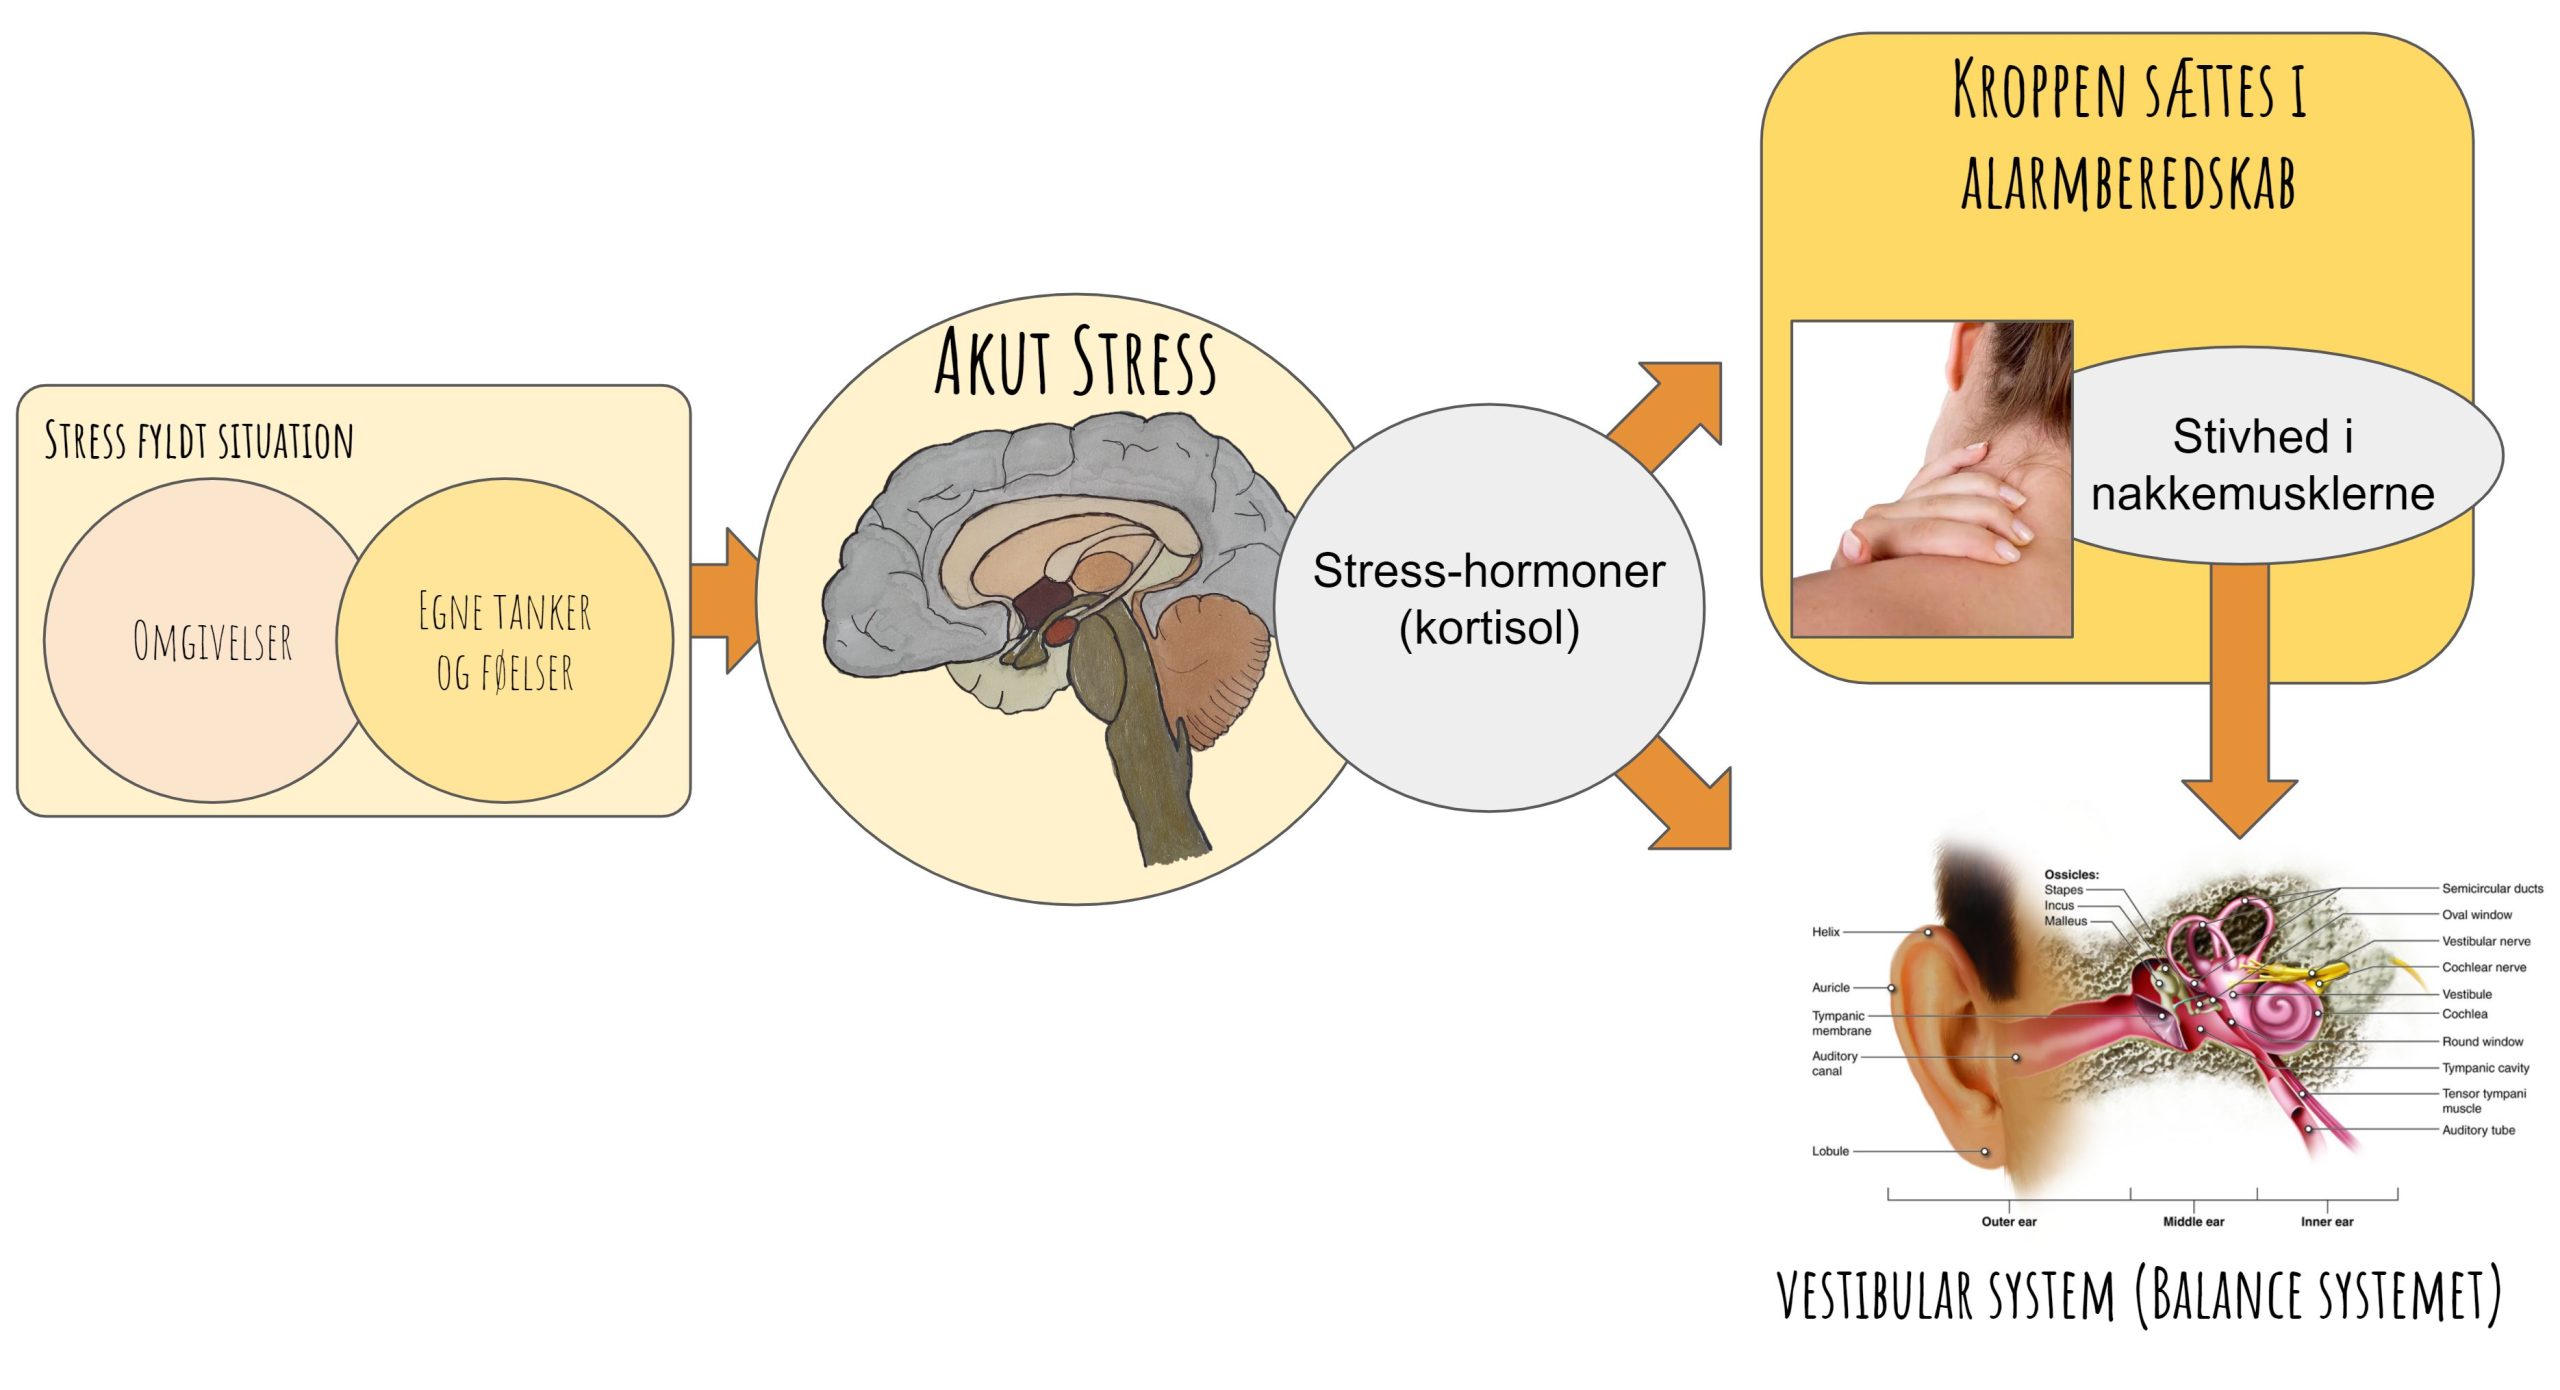 svimmelhed stress stivhed i nakkemusklerne vestibular system